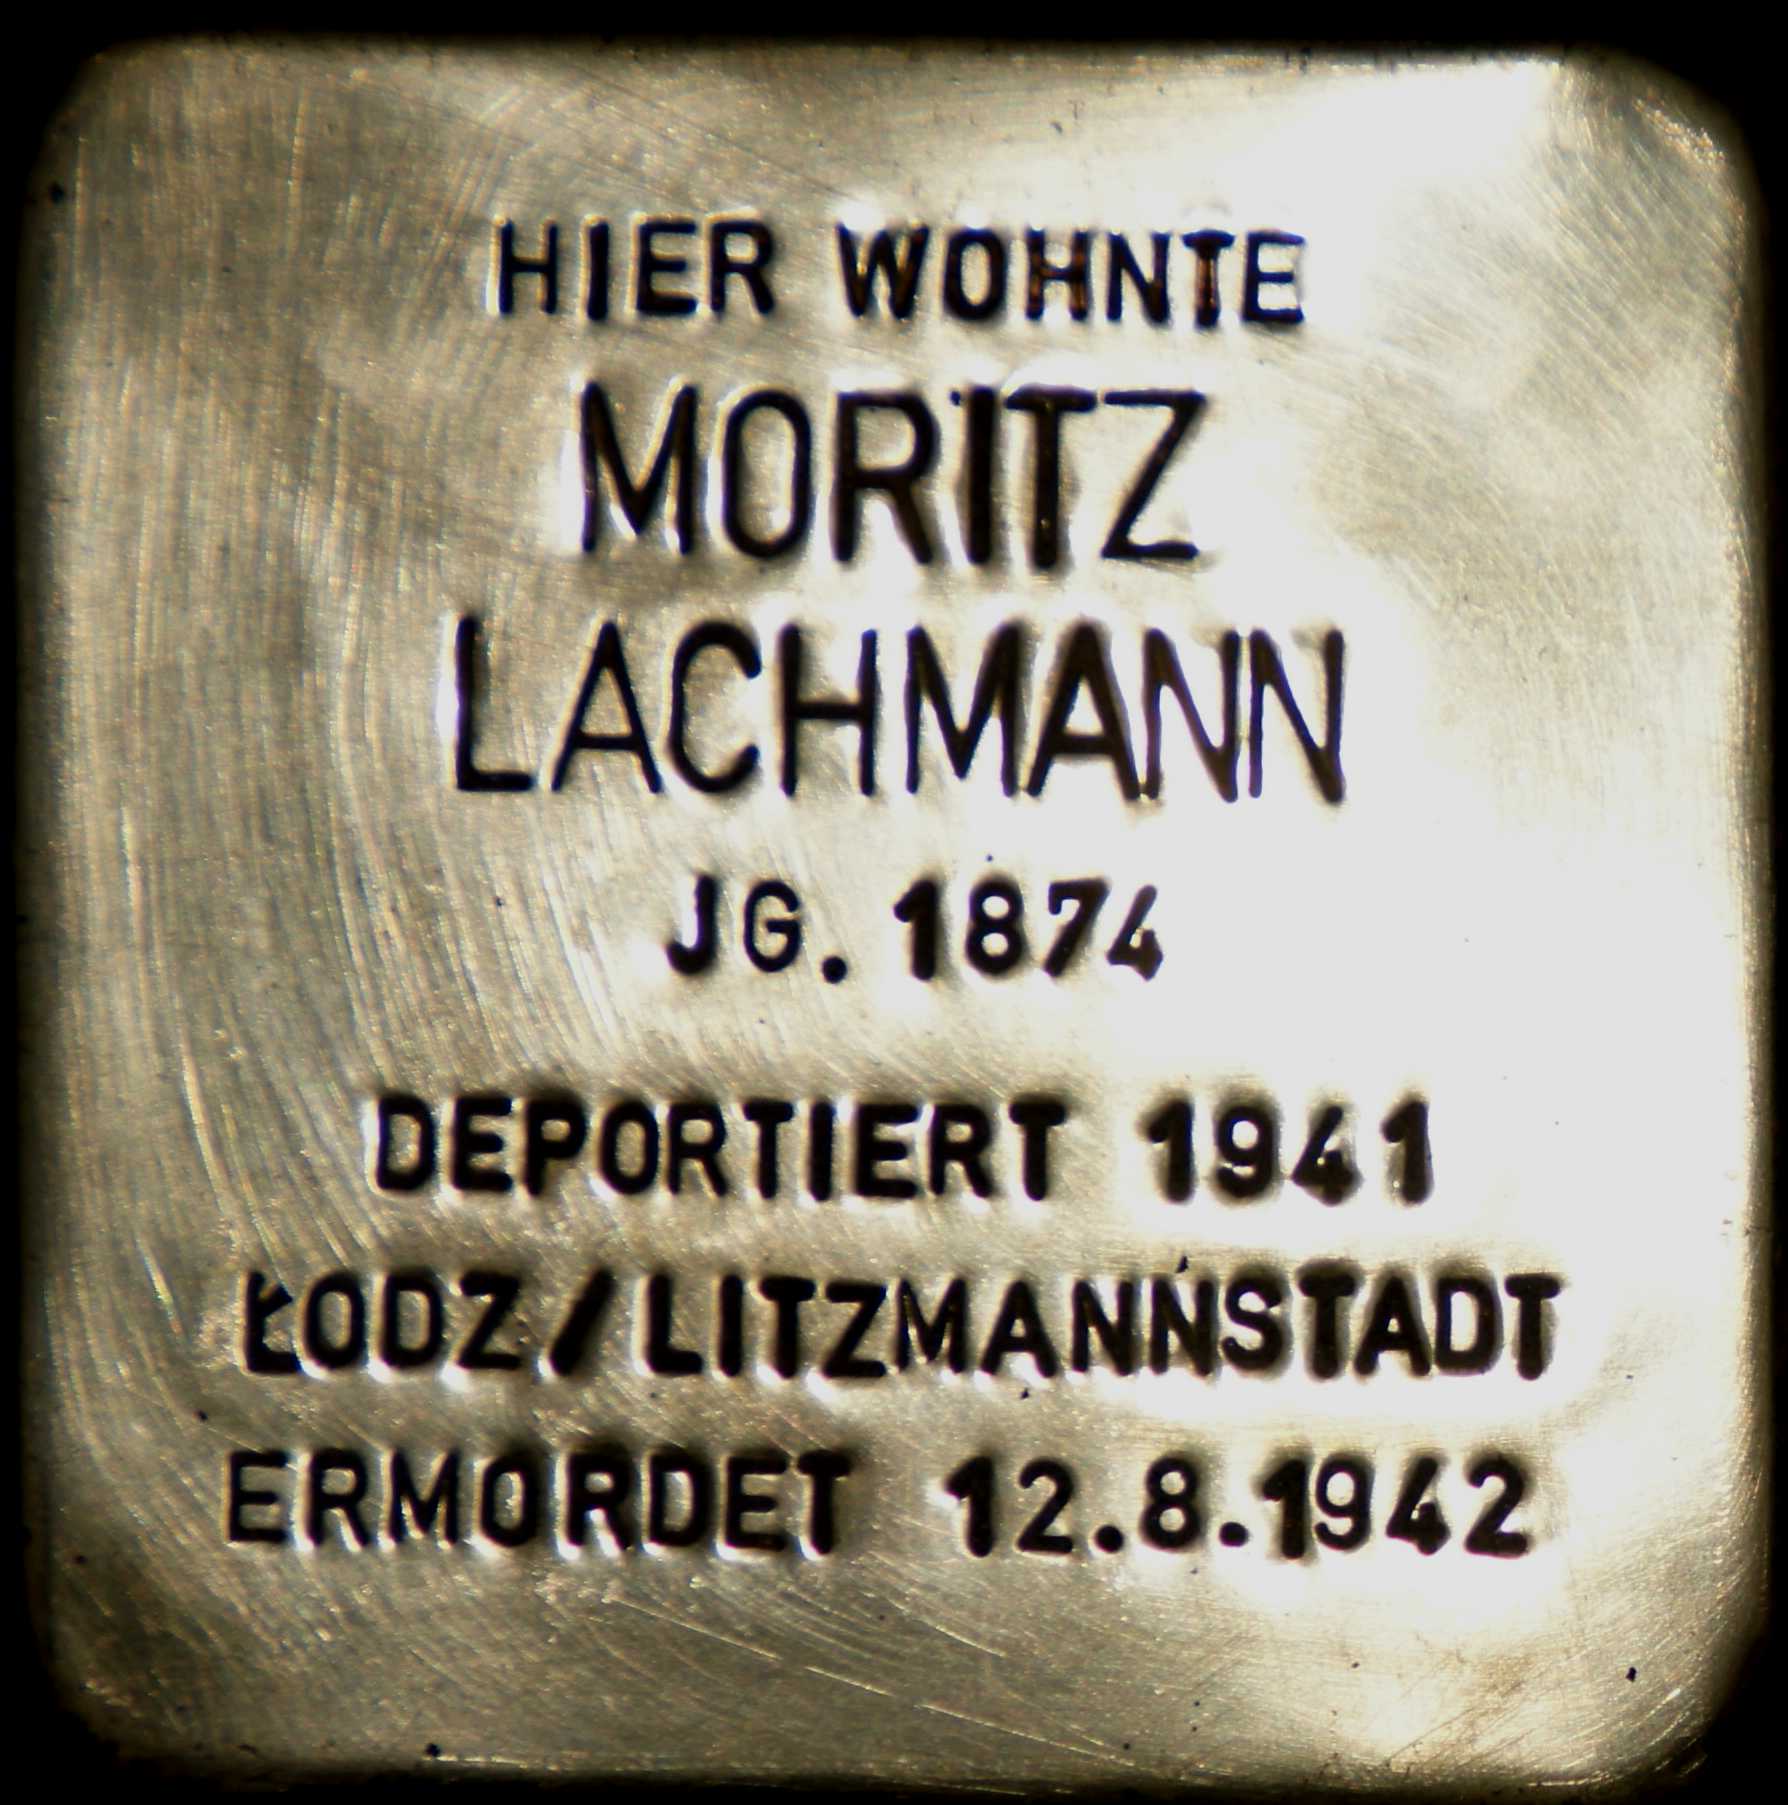 https://stolpersteineaurich.files.wordpress.com/2011/11/moritz-lachmann.jpg